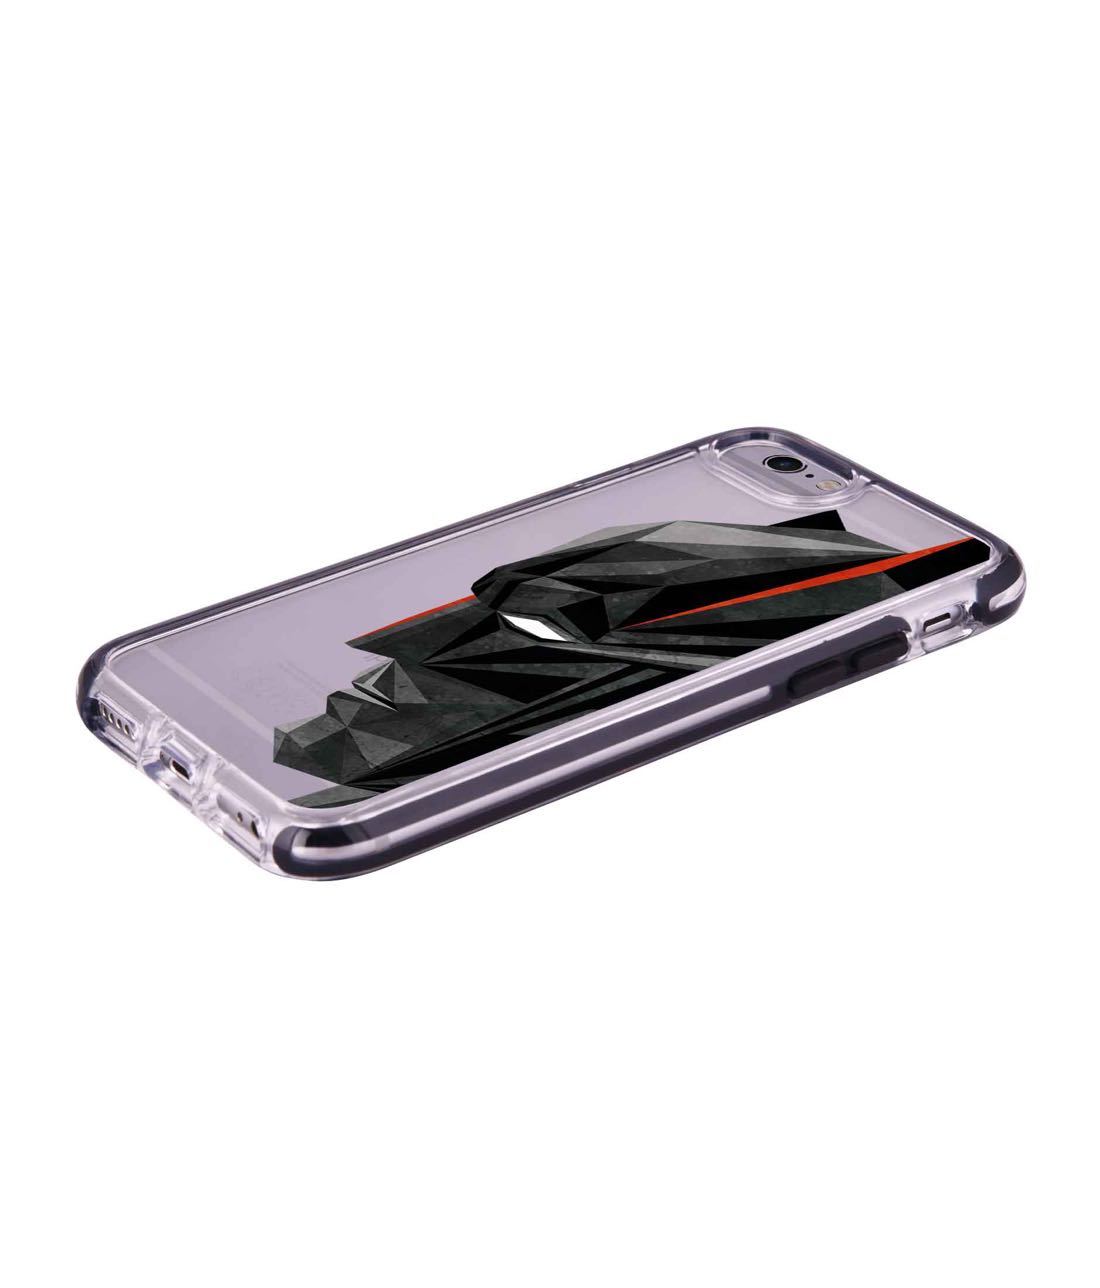 Batman Geometric - Extreme Phone Case for iPhone 6 Plus